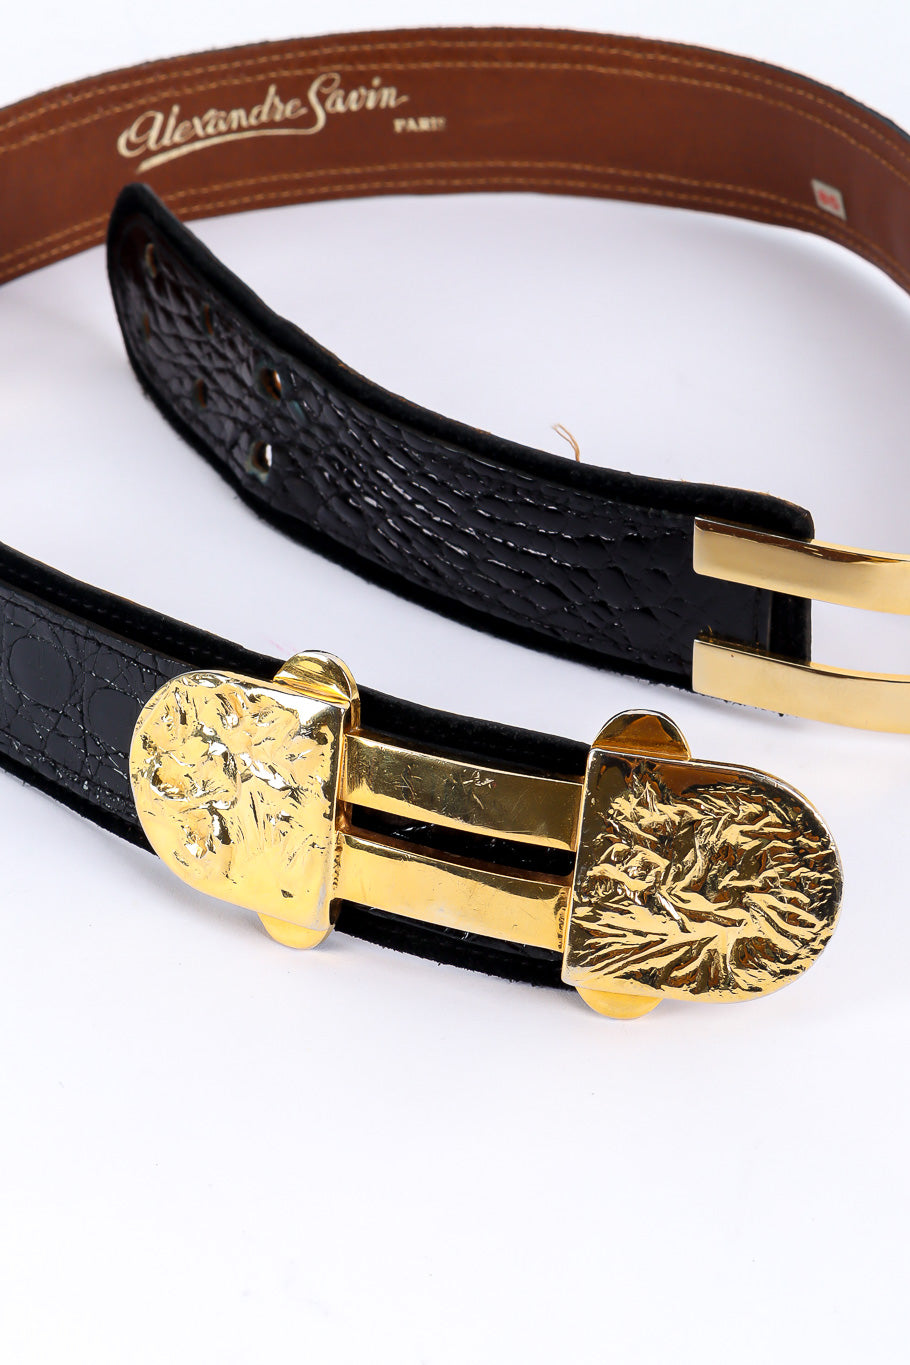 leather gold hinge belt by Alexandre Savin Paris buckle close @recessla